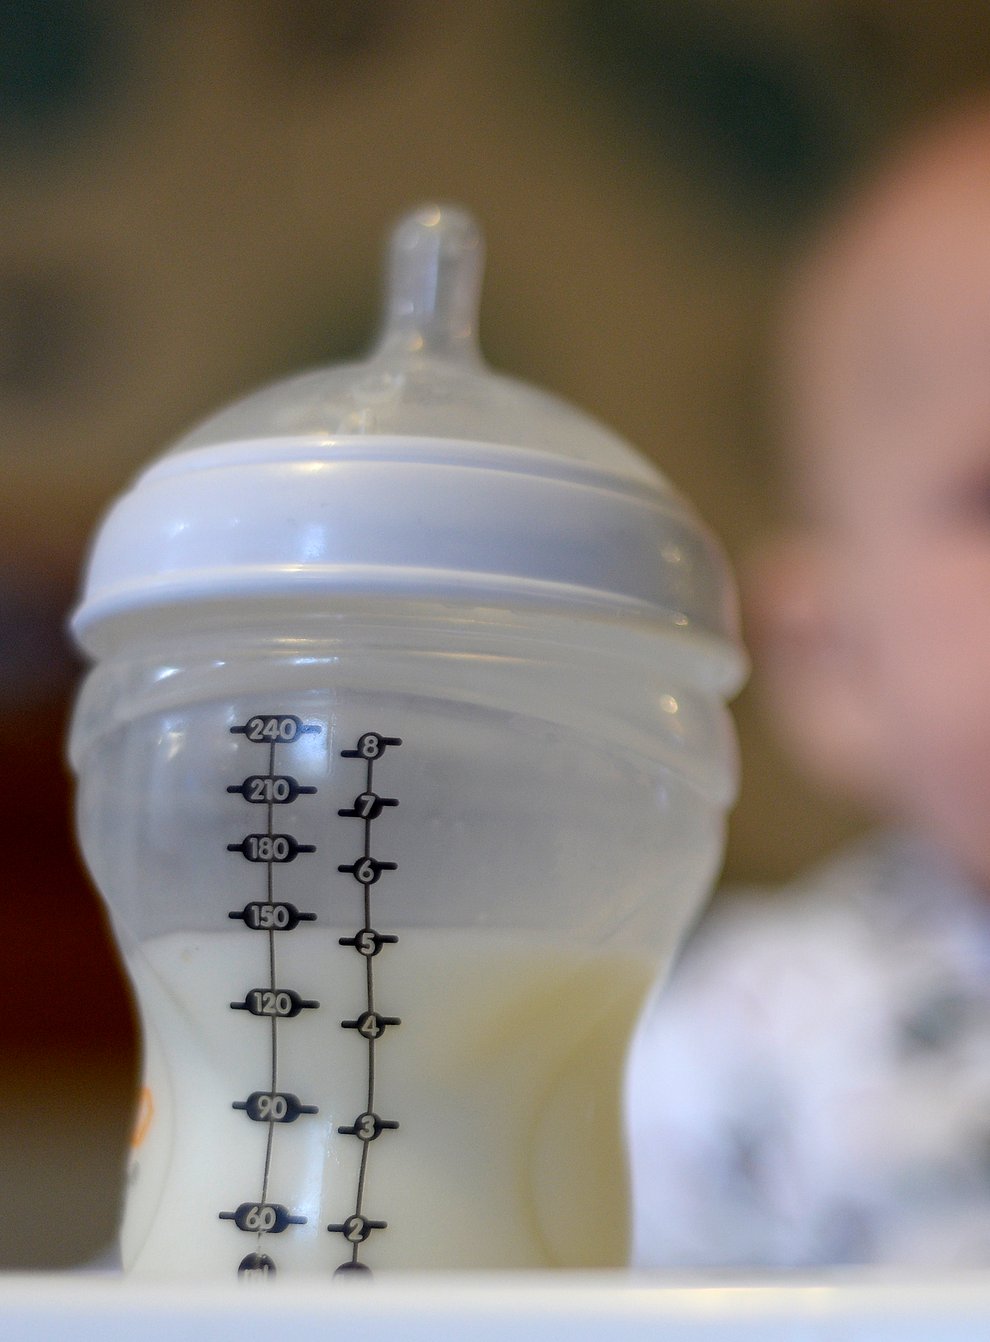 Baby looks at milk bottle